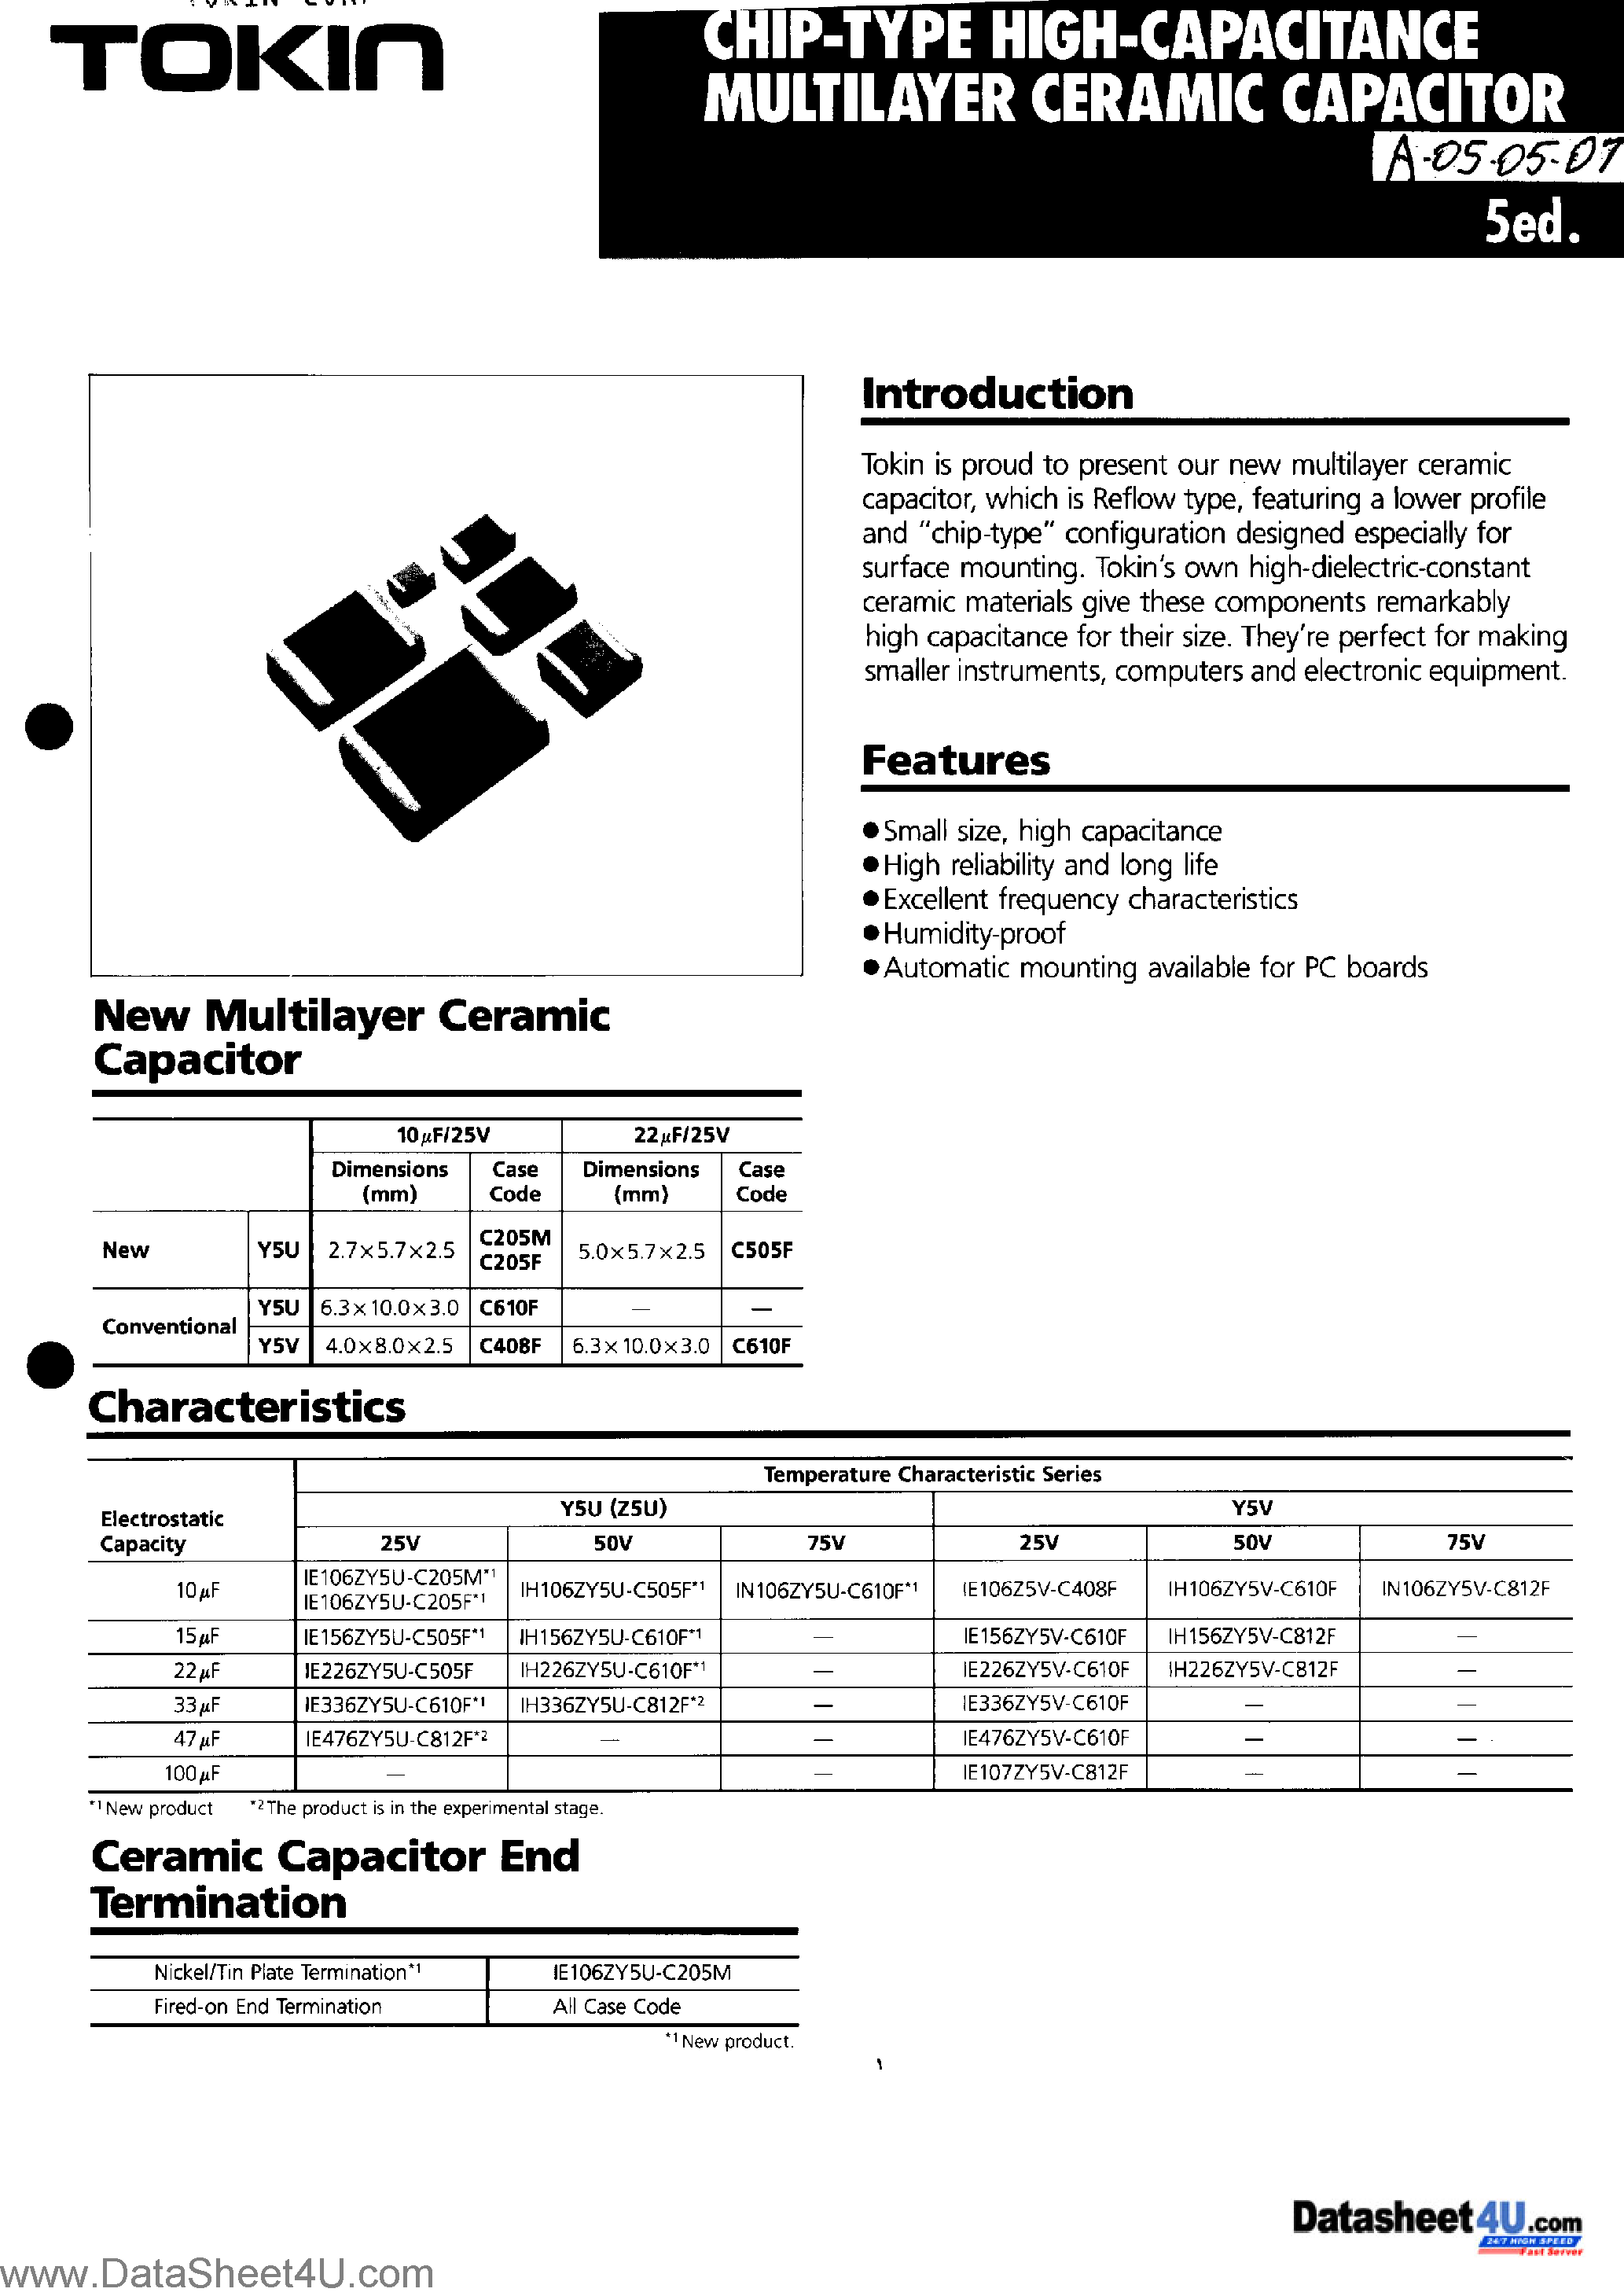 Даташит 1N106ZY5U-Cxxx - Chip Type High Capacitance Multilayer Ceramic Capacitor страница 1